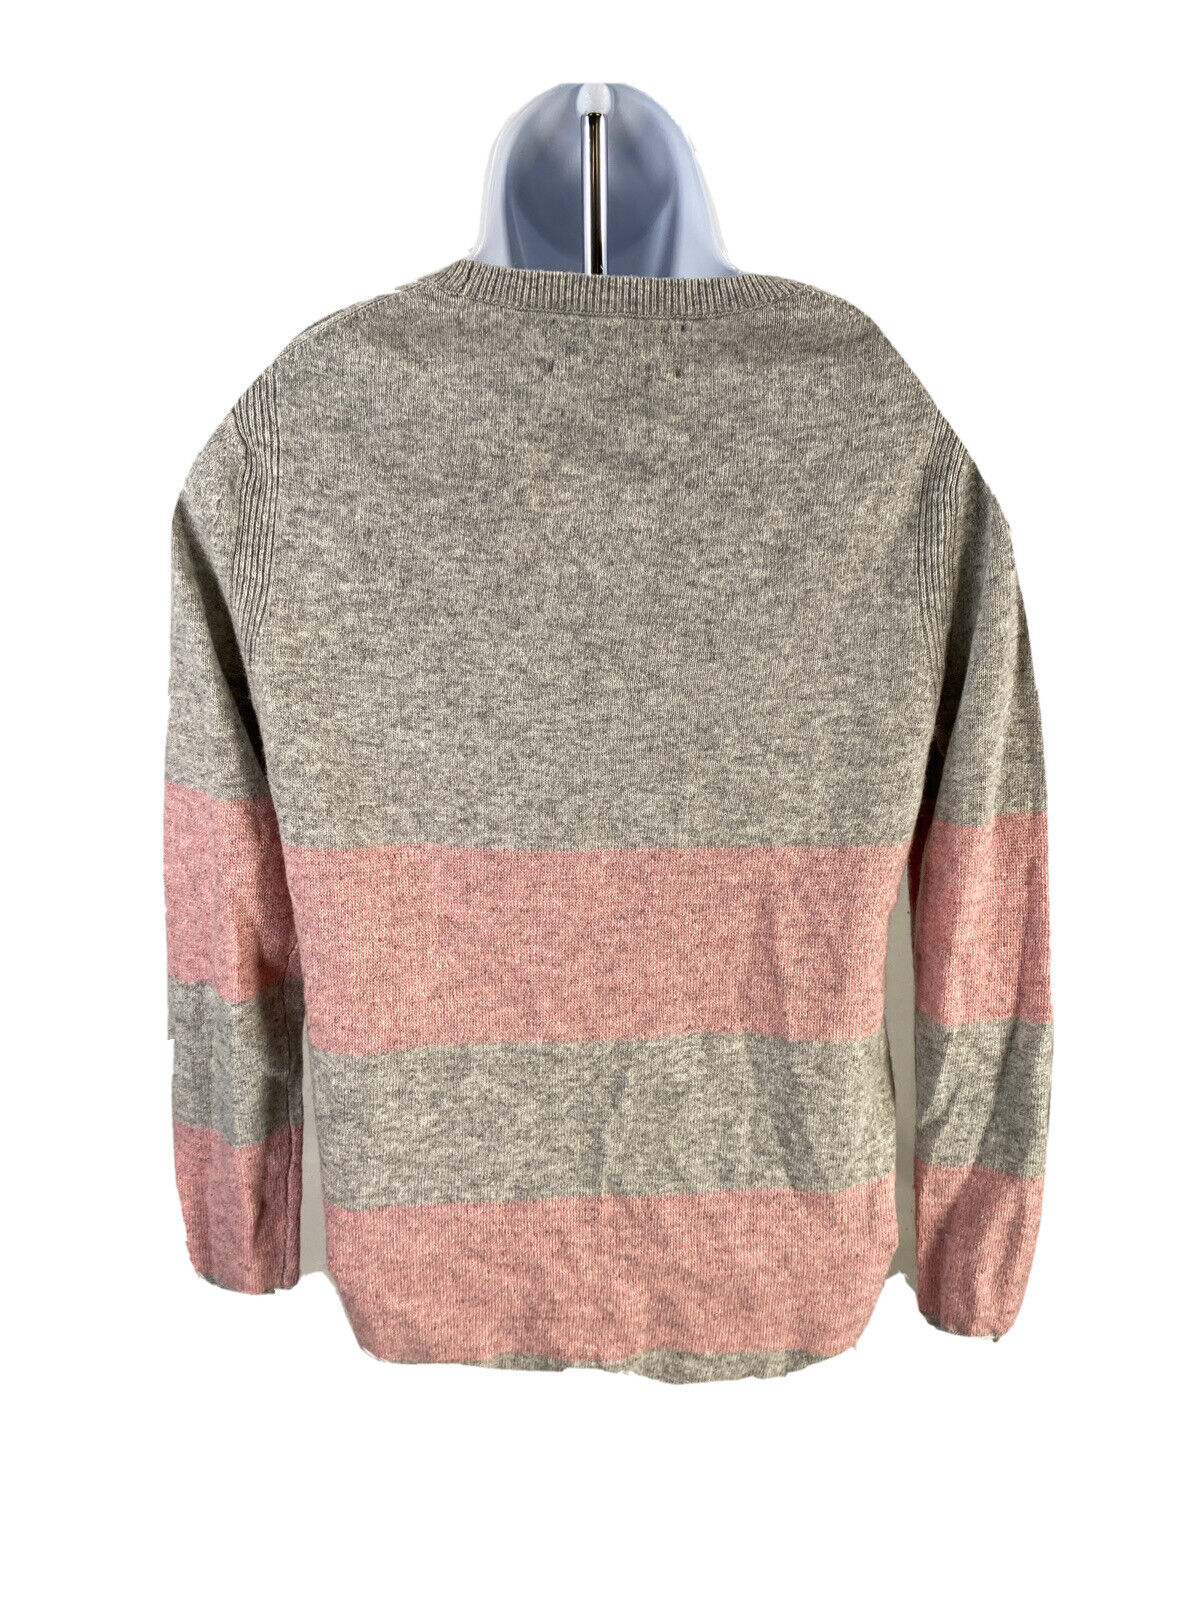 Banana Republic Women's Gray/Pink Striped Long Sleeve Knit Sweater Sz XS